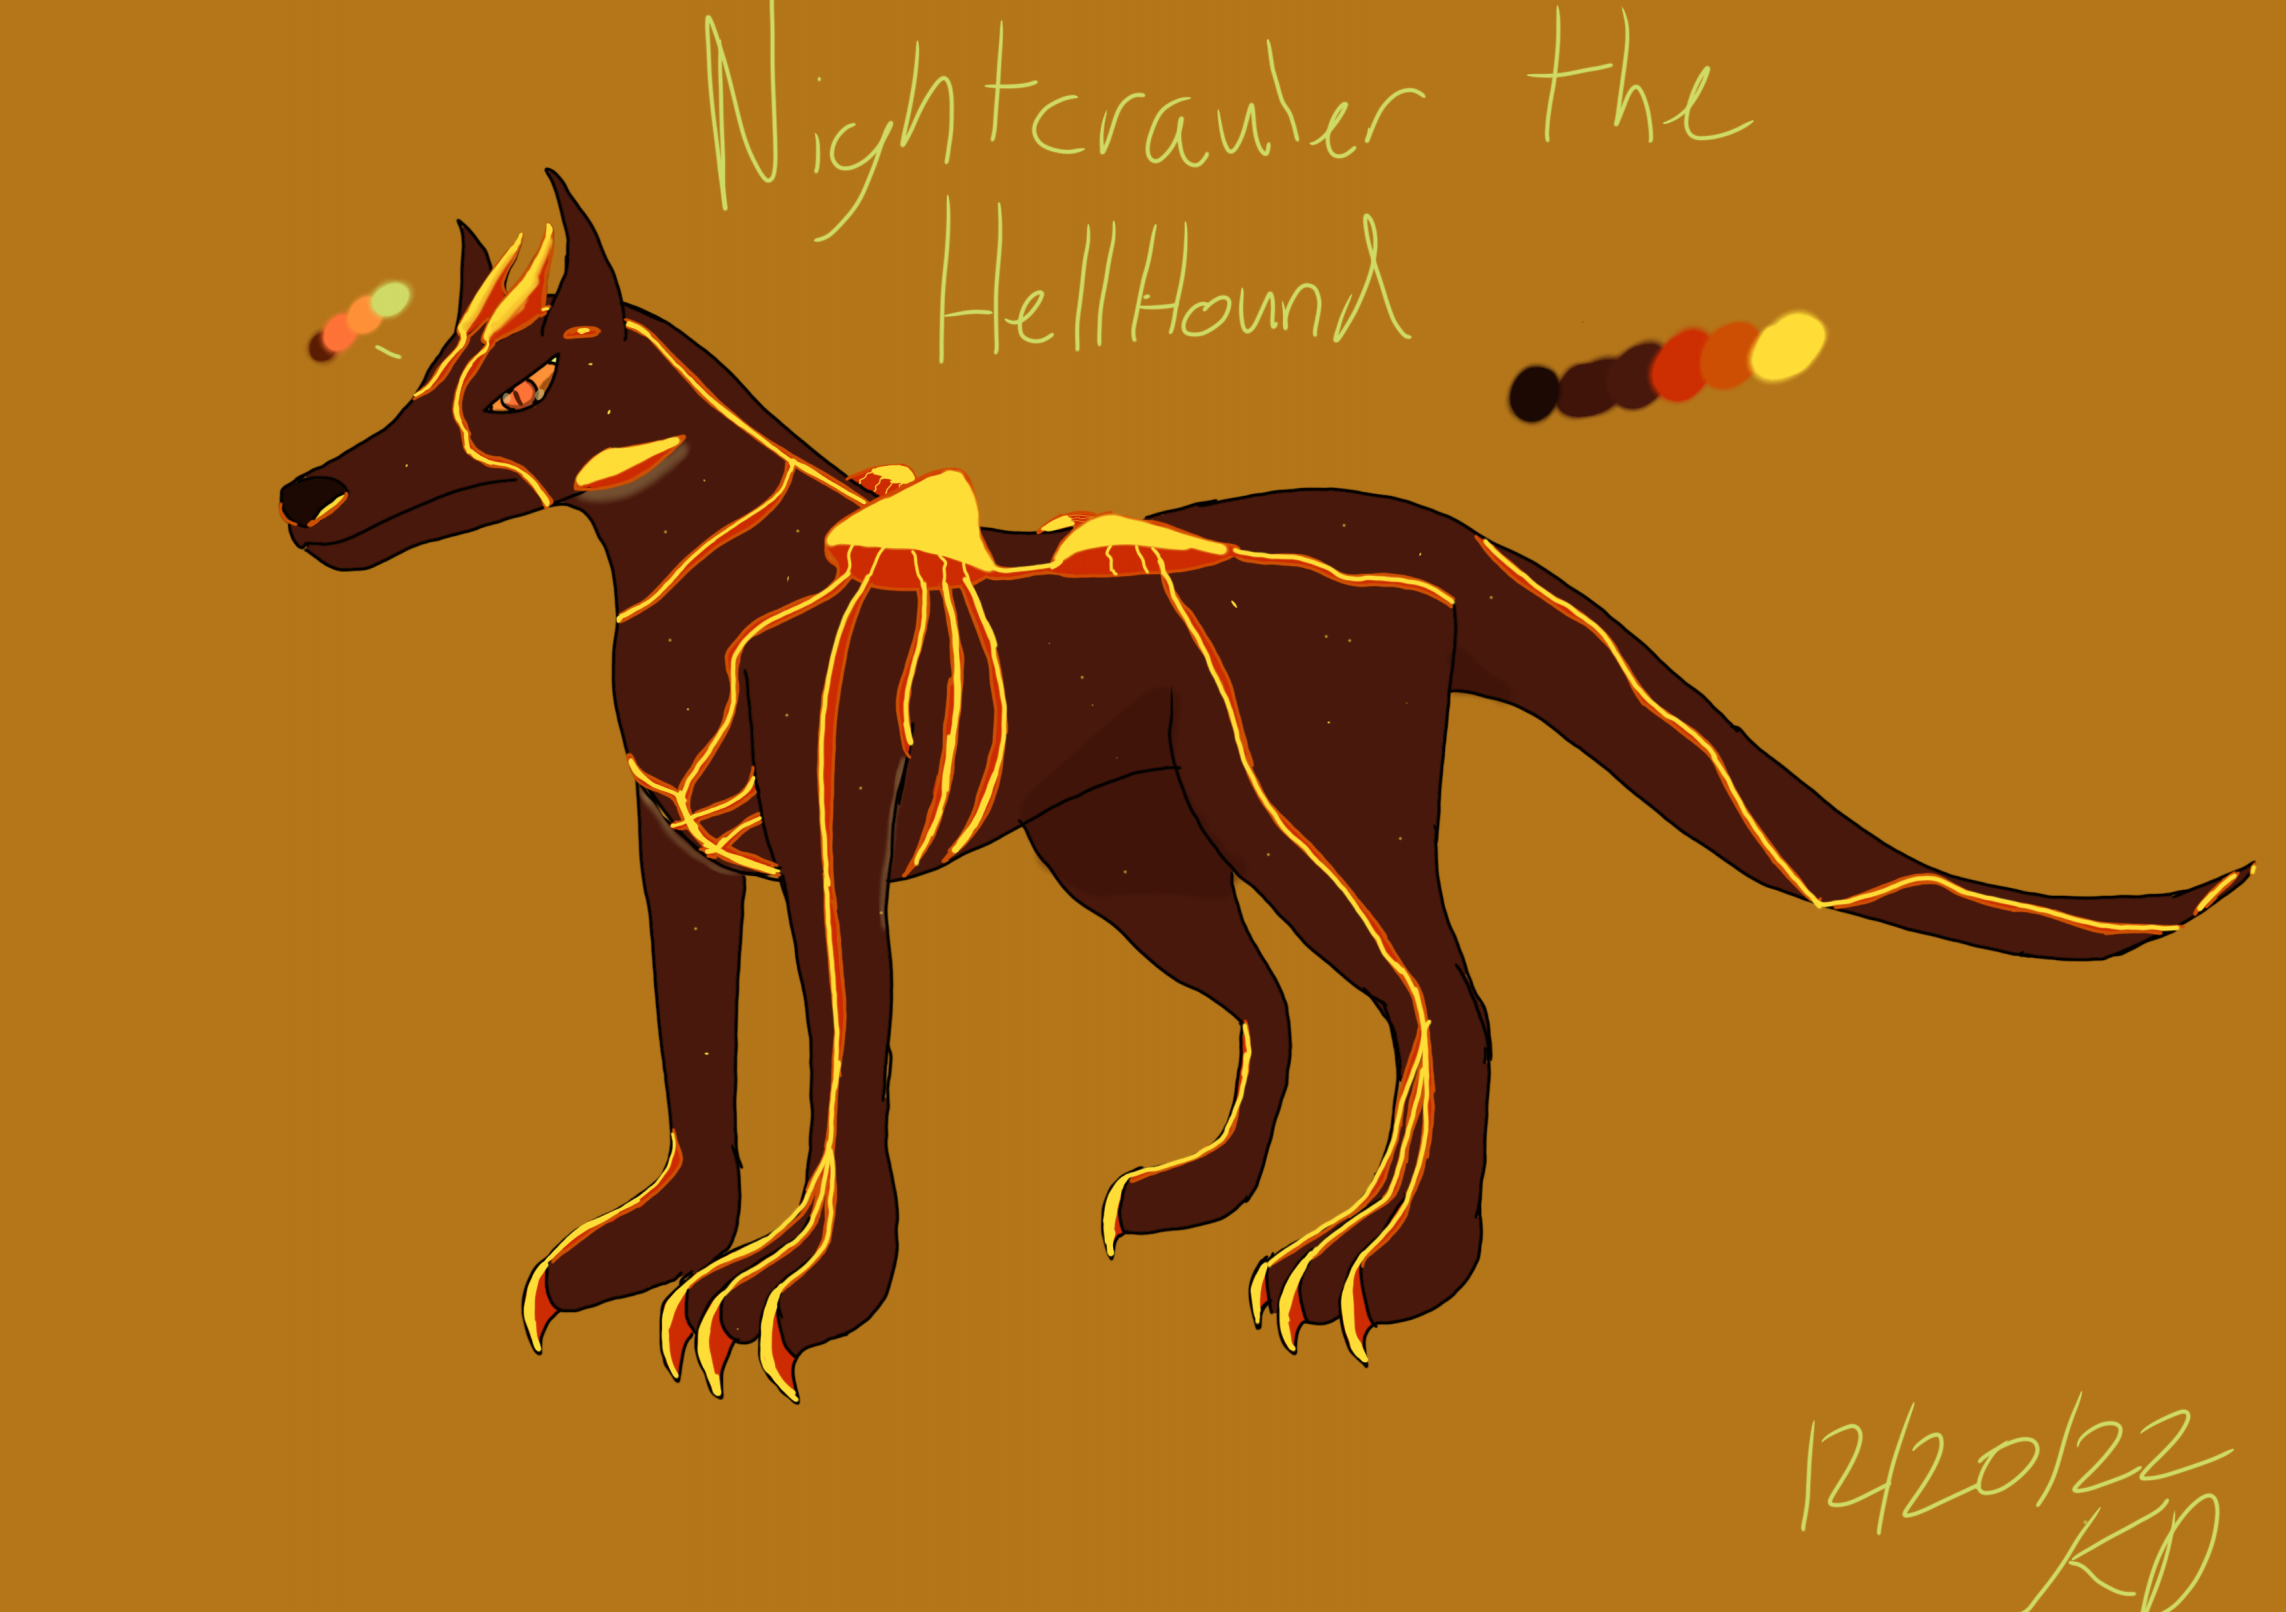 Nightcrawler now Magnoct the Hellhound by MakaAngel -- Fur